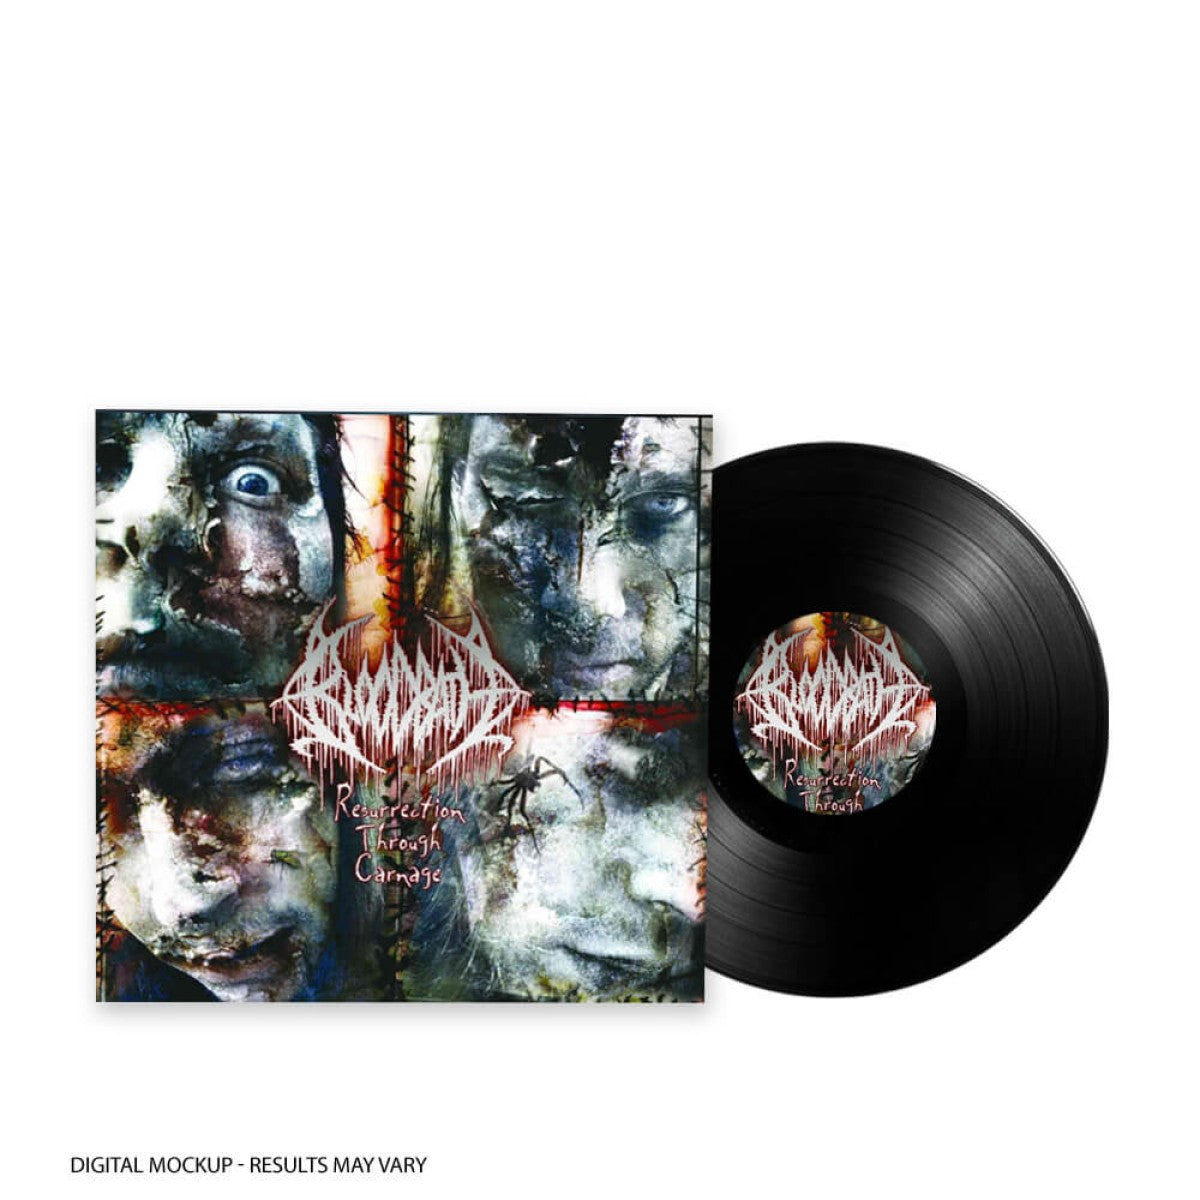 Bloodbath "Resurrection Through Carnage" Black Vinyl